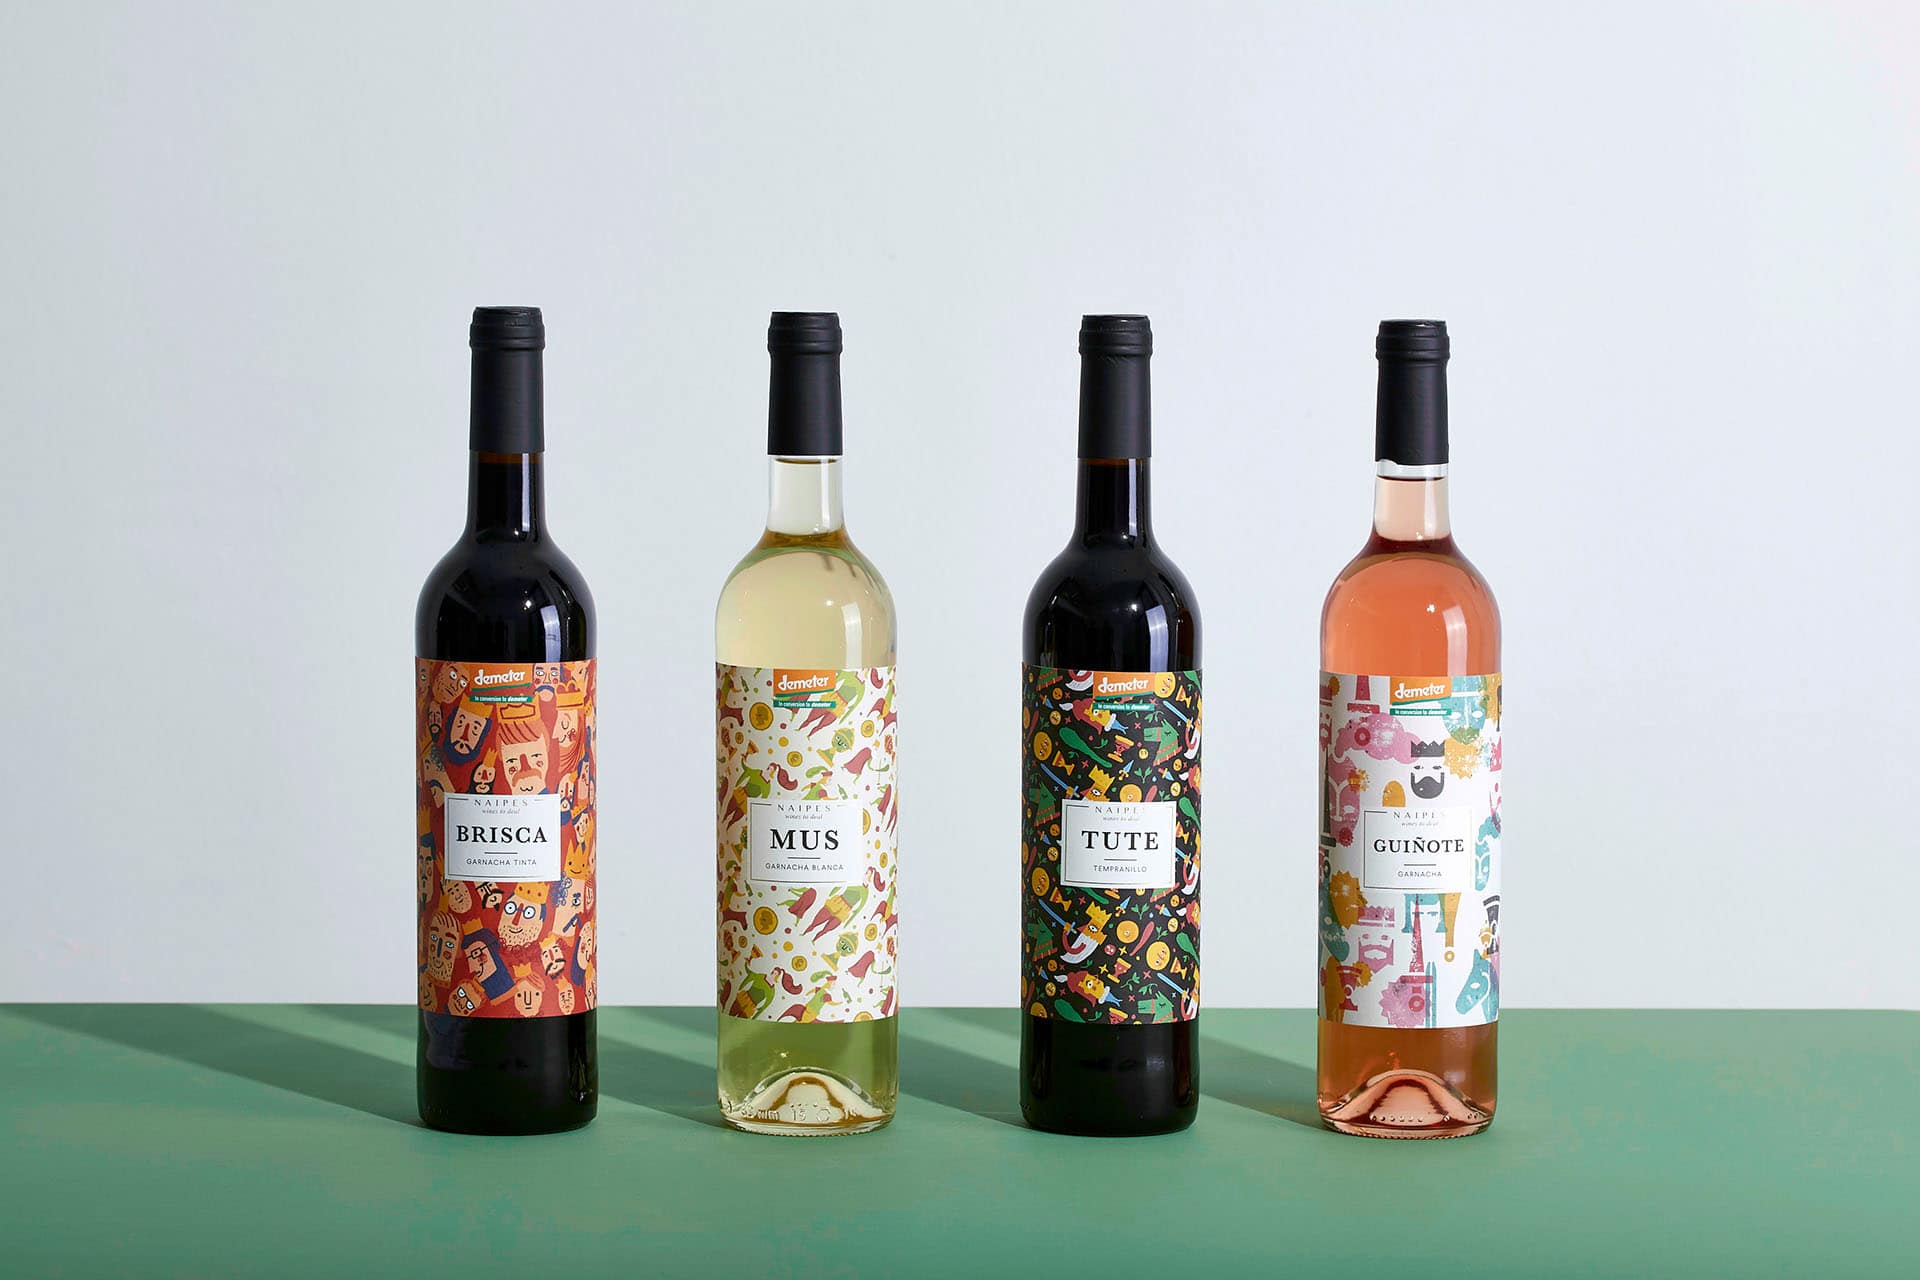 Naipes wines label - etiqueta de vino